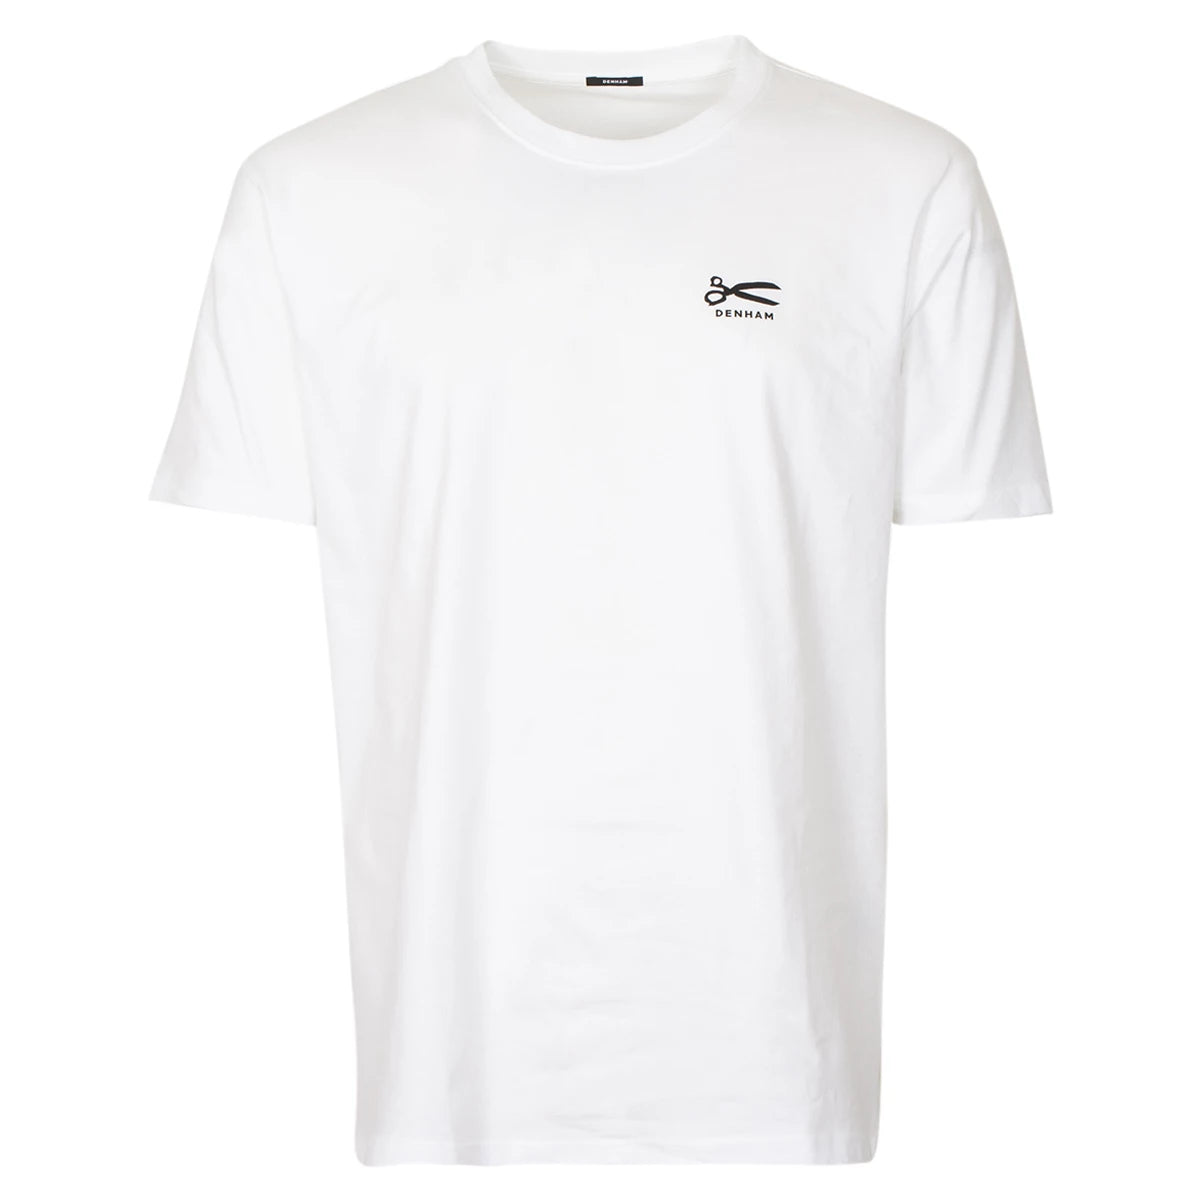 Denham T-shirt wit | Snap regular tee